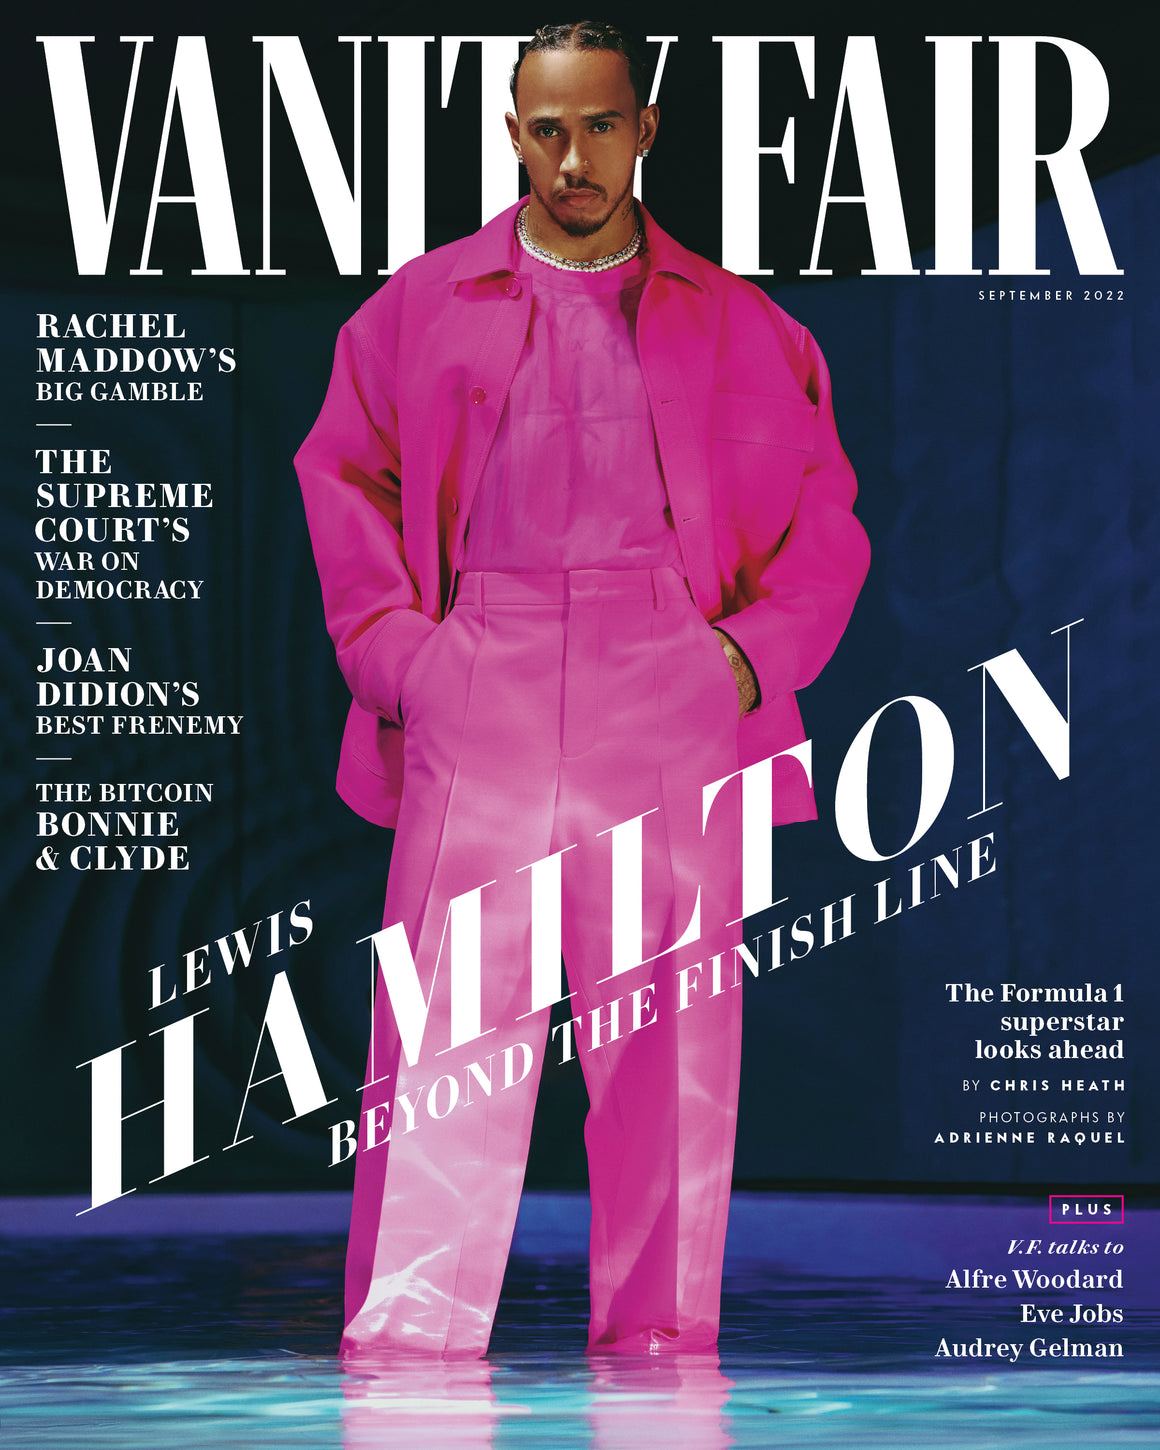 Vanity Fair Magazine (UK) - September 2022 LEWIS HAMILTON COVER